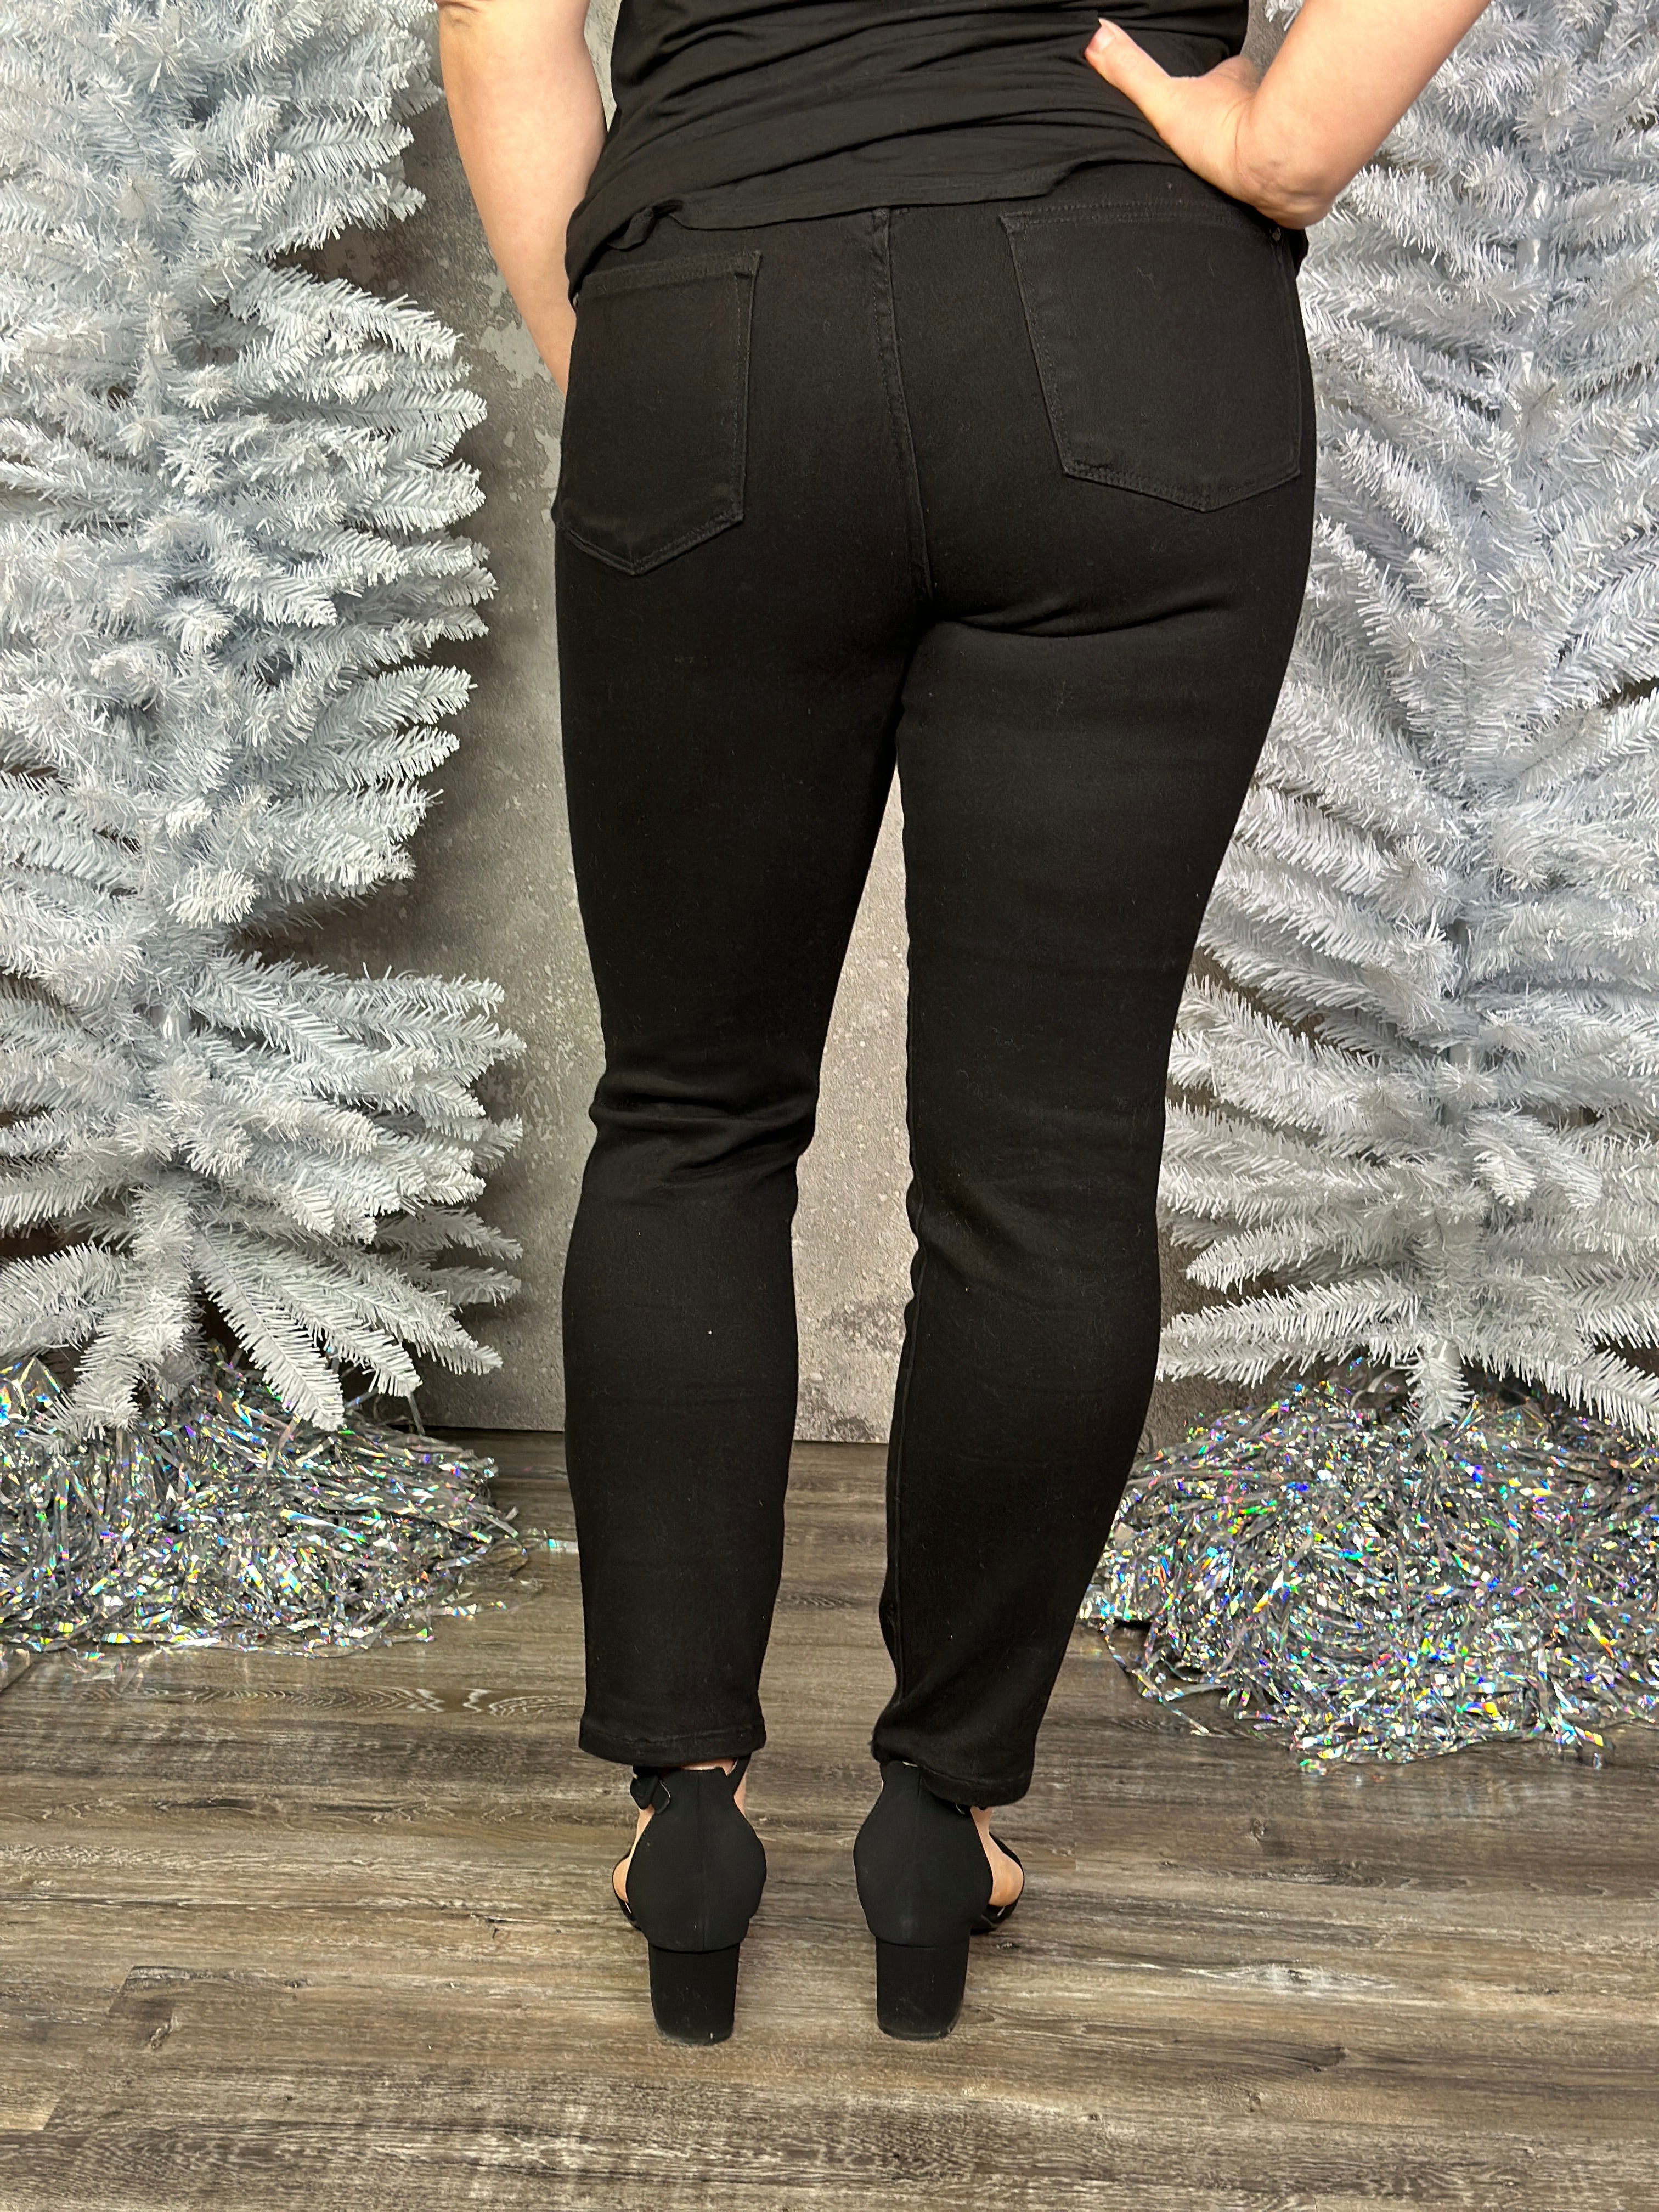 Judy Blue Dark Wash Skinny Fit Tummy Control Jean (sizes 24-24W) - FIN -  The Pink Porcupine ltd.